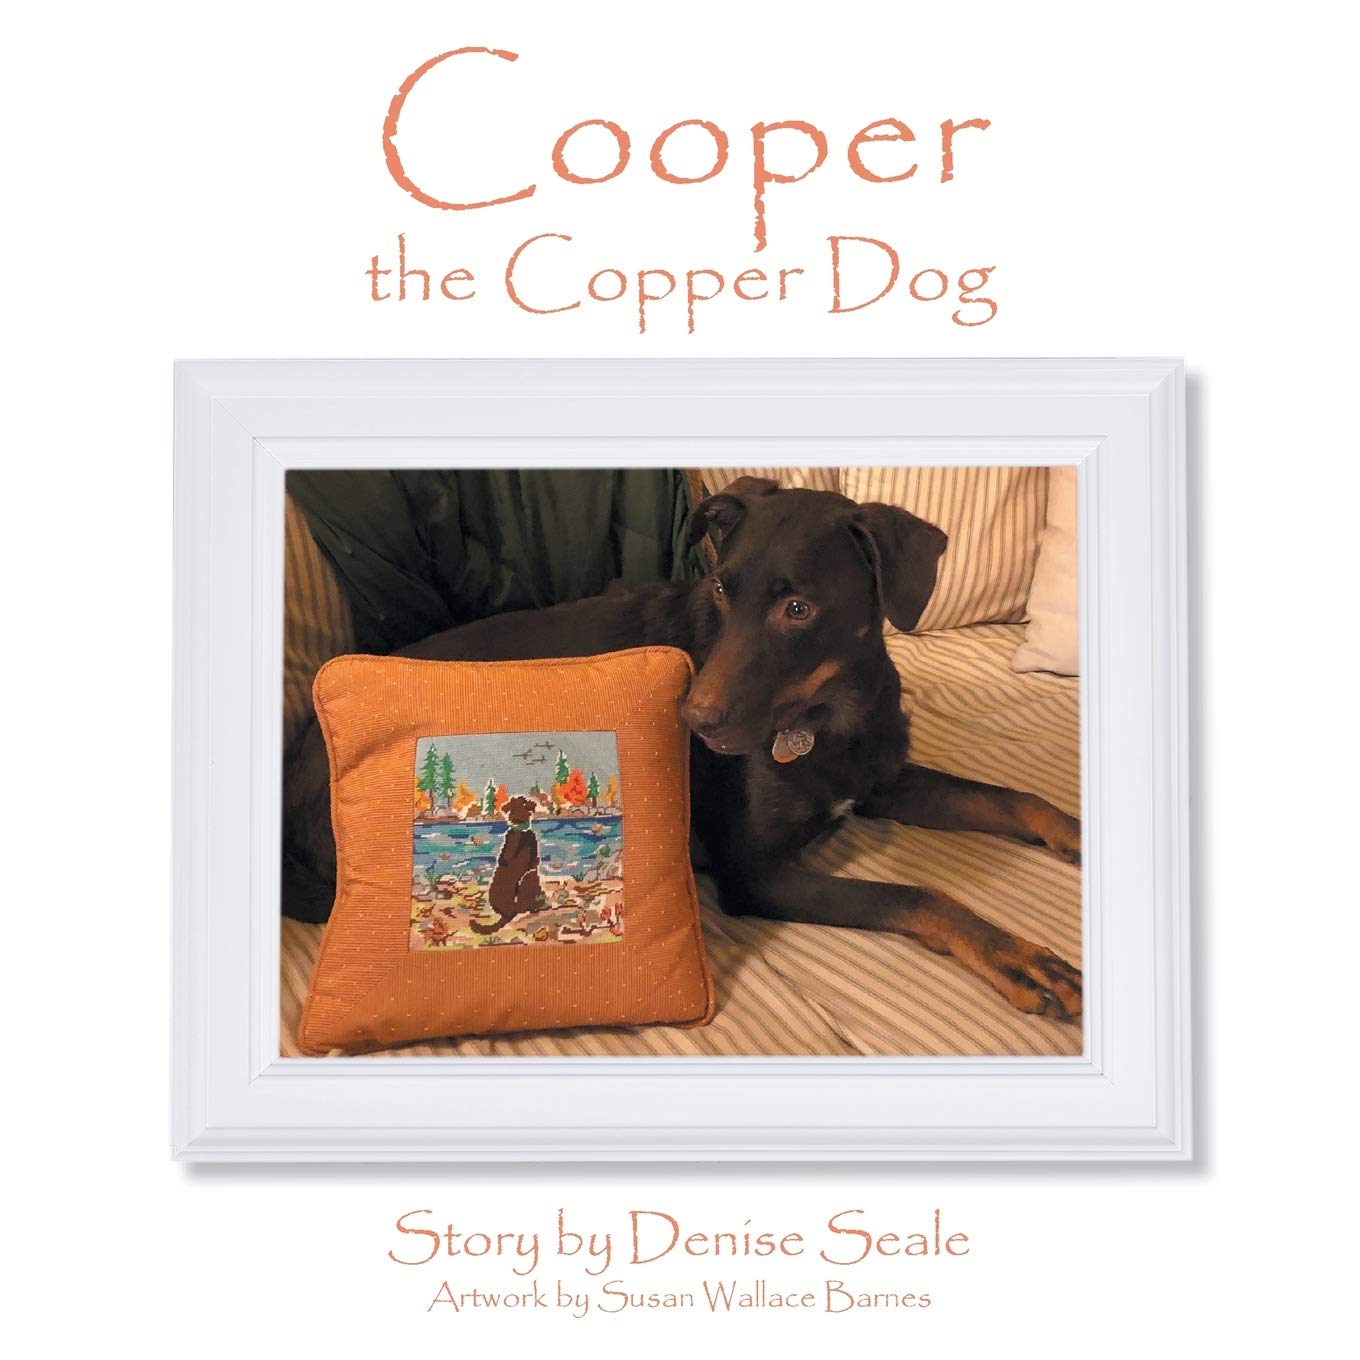 Woof-Fantastic Adventure of Cooper The Dog